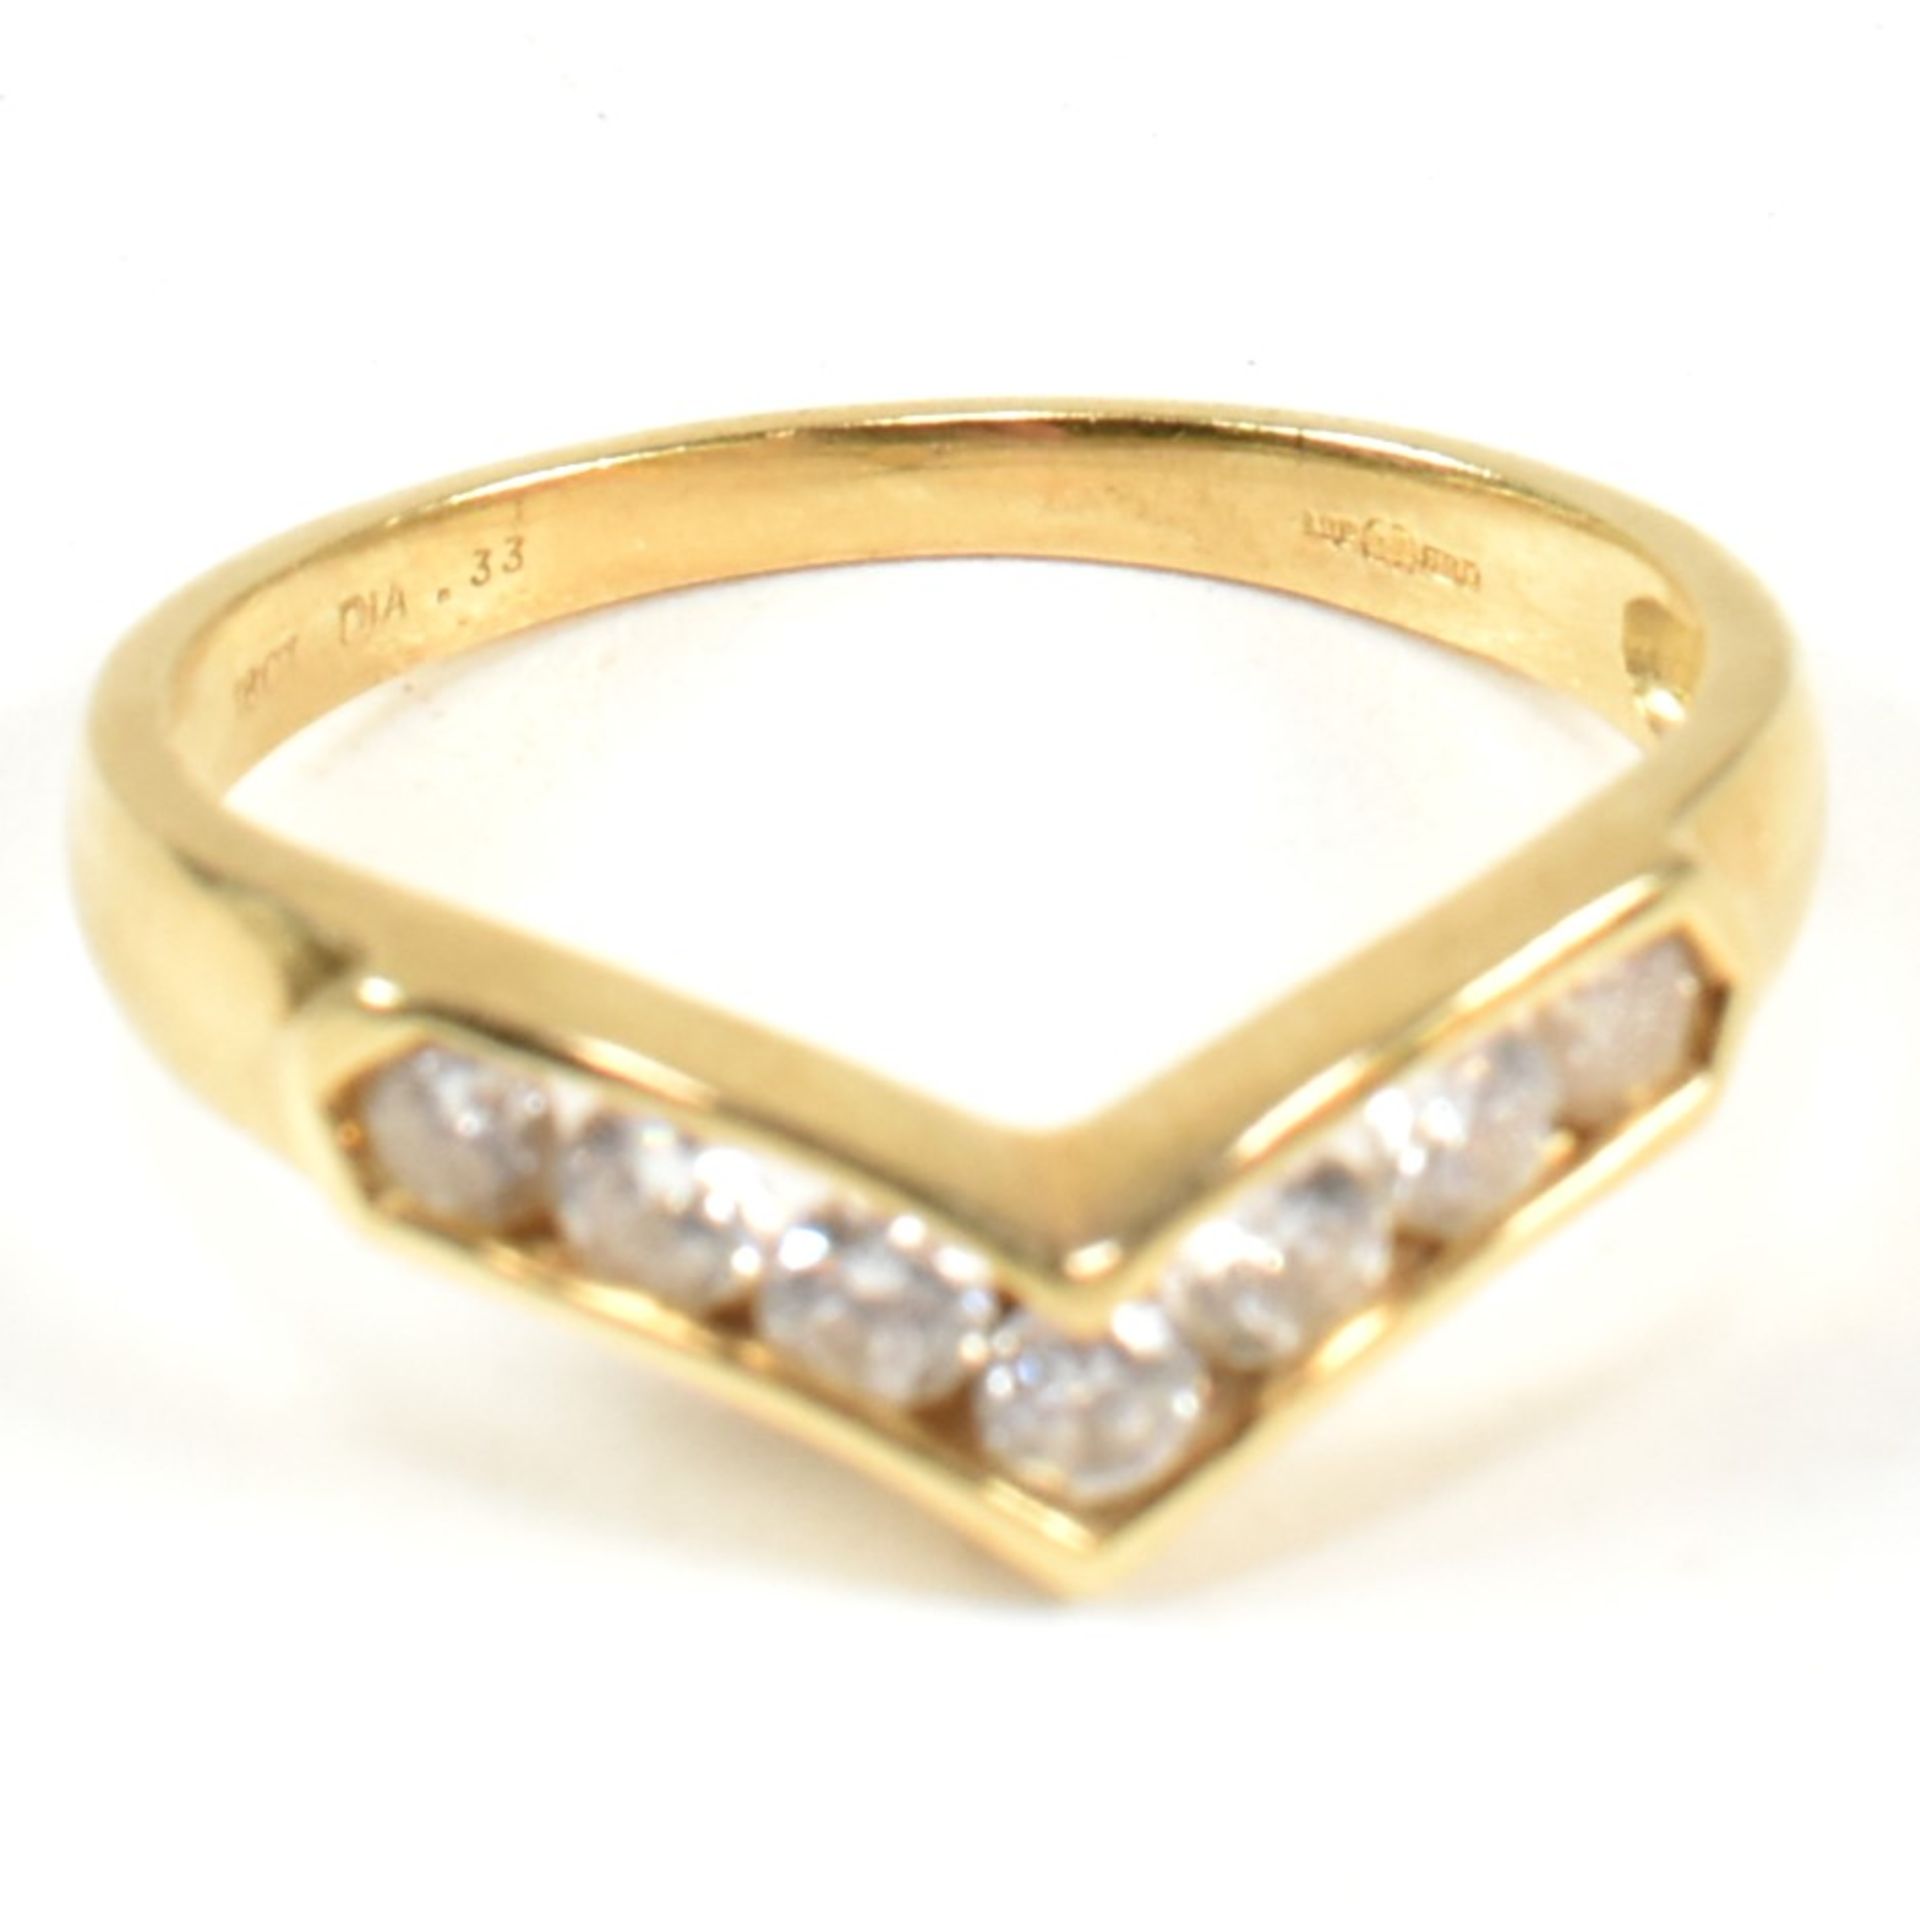 HALLMARKED 18CT GOLD & DIAMOND WISHBONE RING - Image 8 of 9